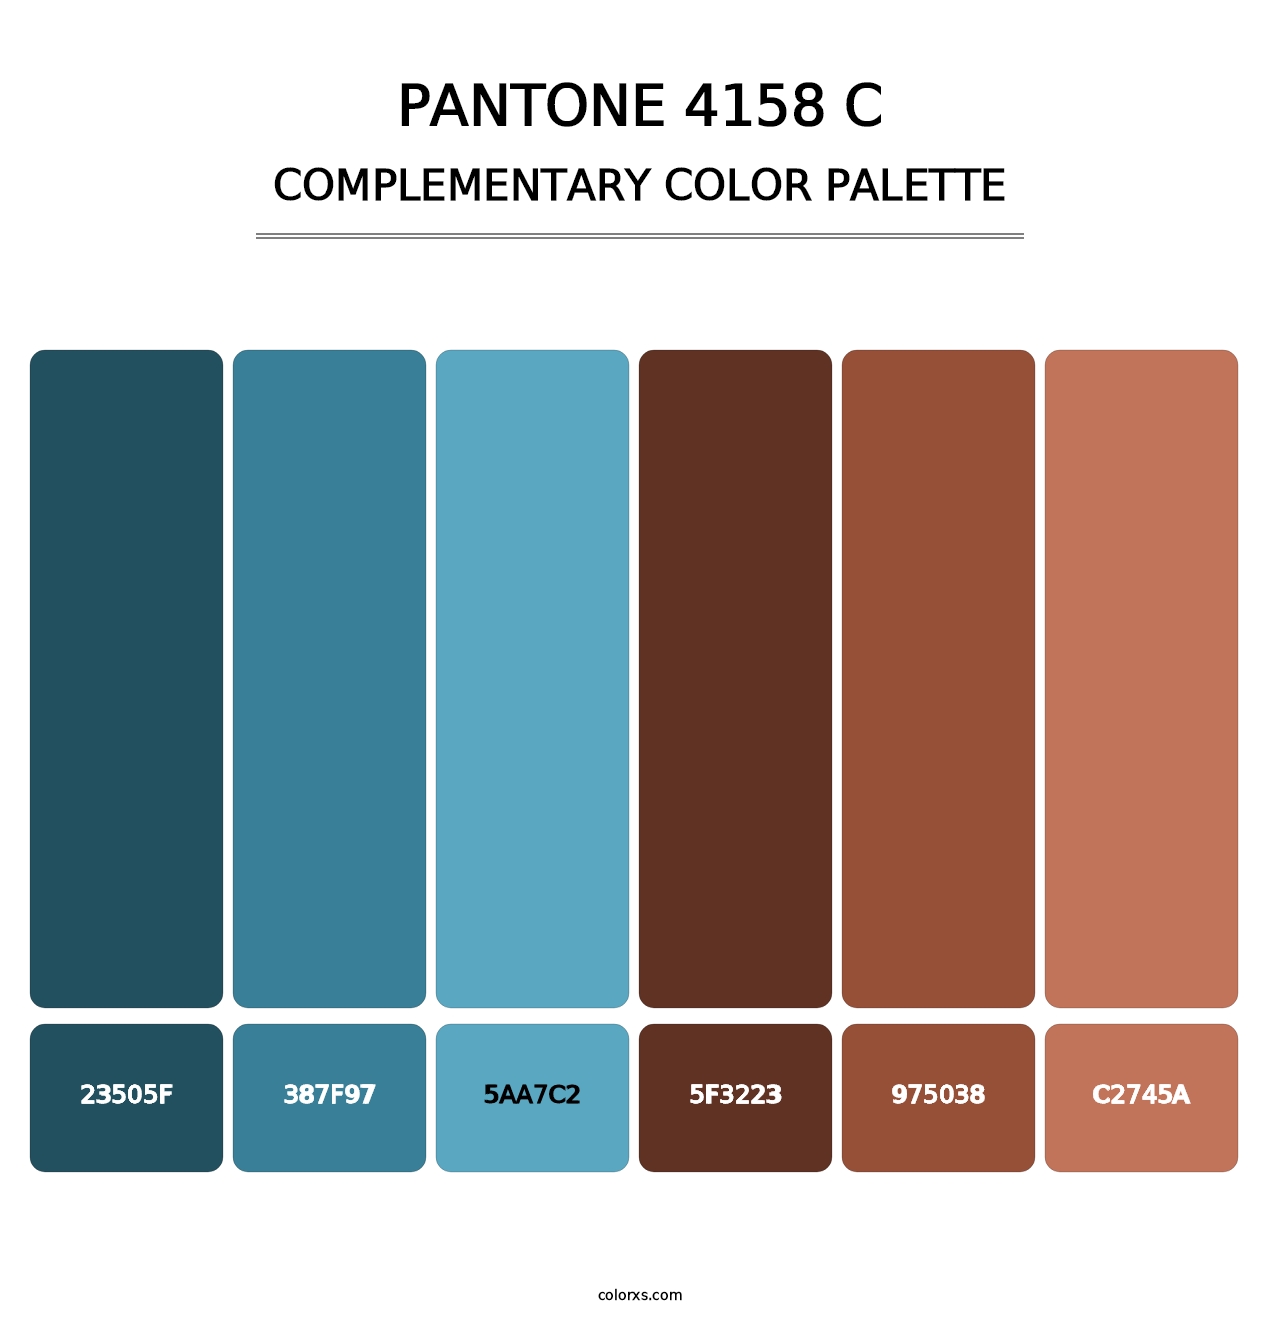 PANTONE 4158 C - Complementary Color Palette